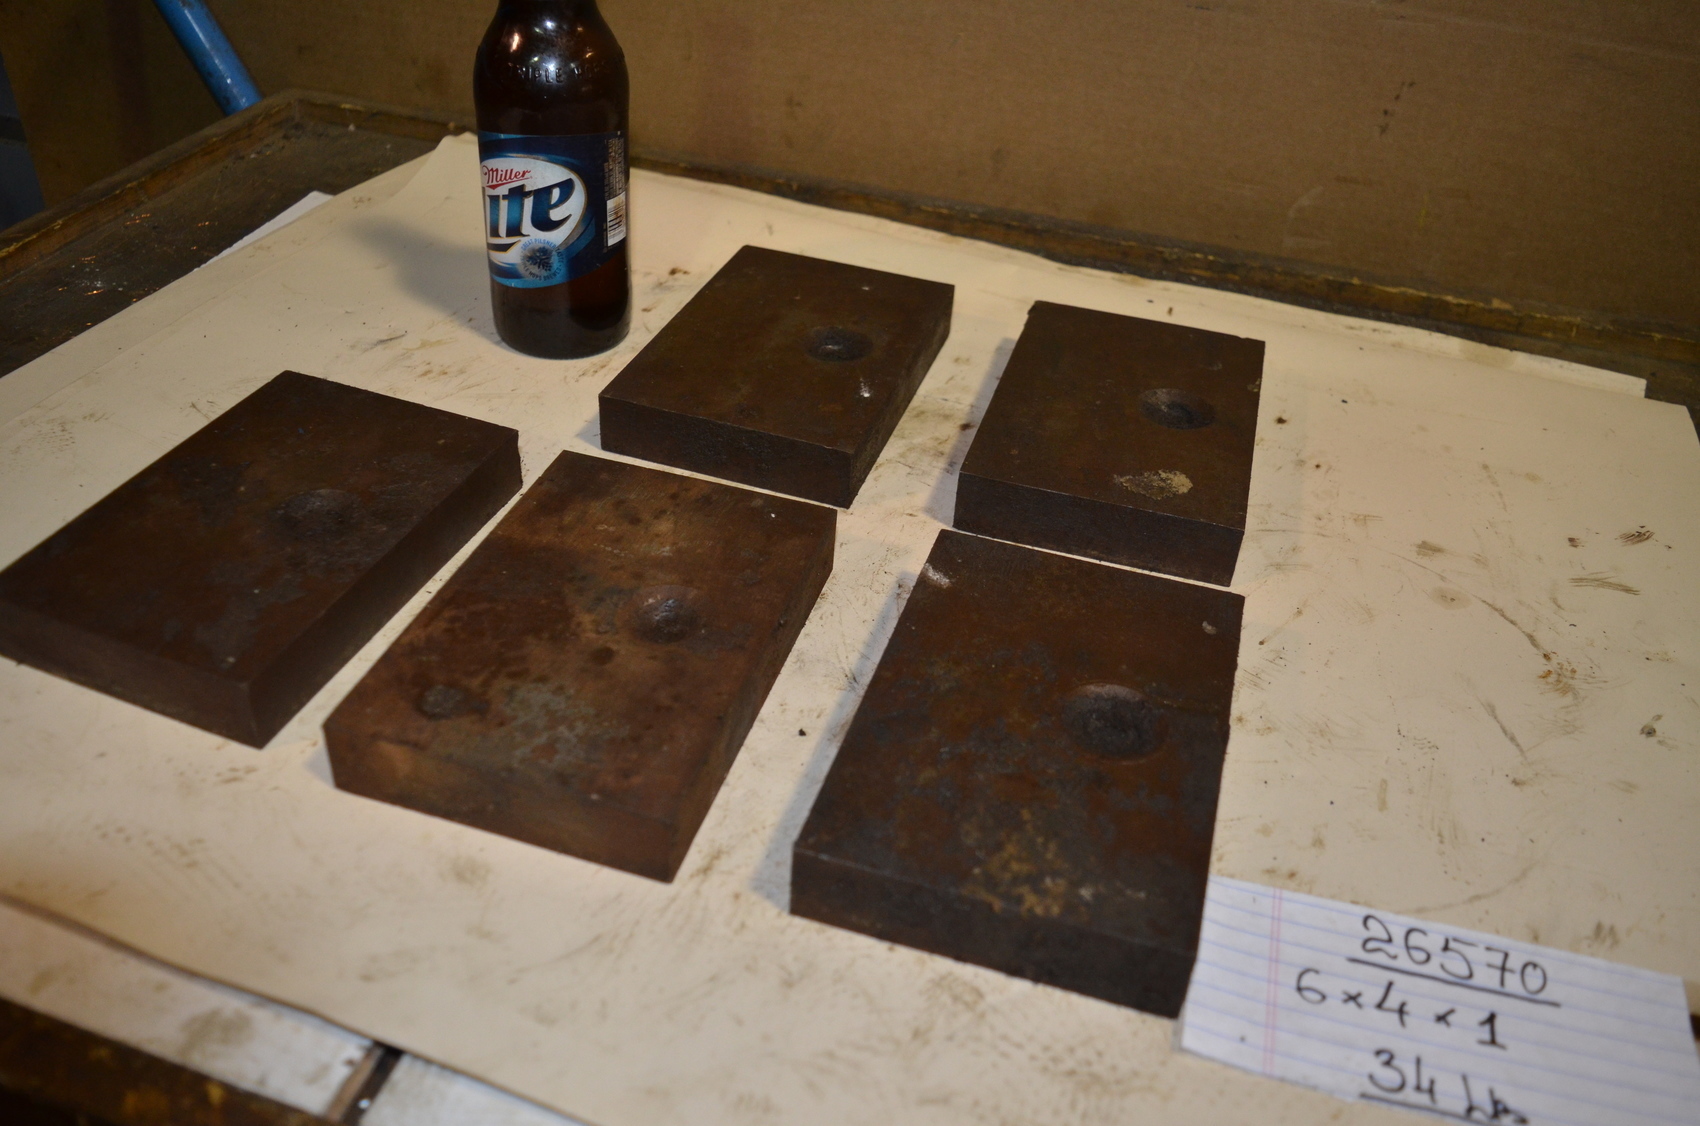 Lot of 5 steel Rectangular Bar for blacksmith anvil,34 lbs;6x4x1"